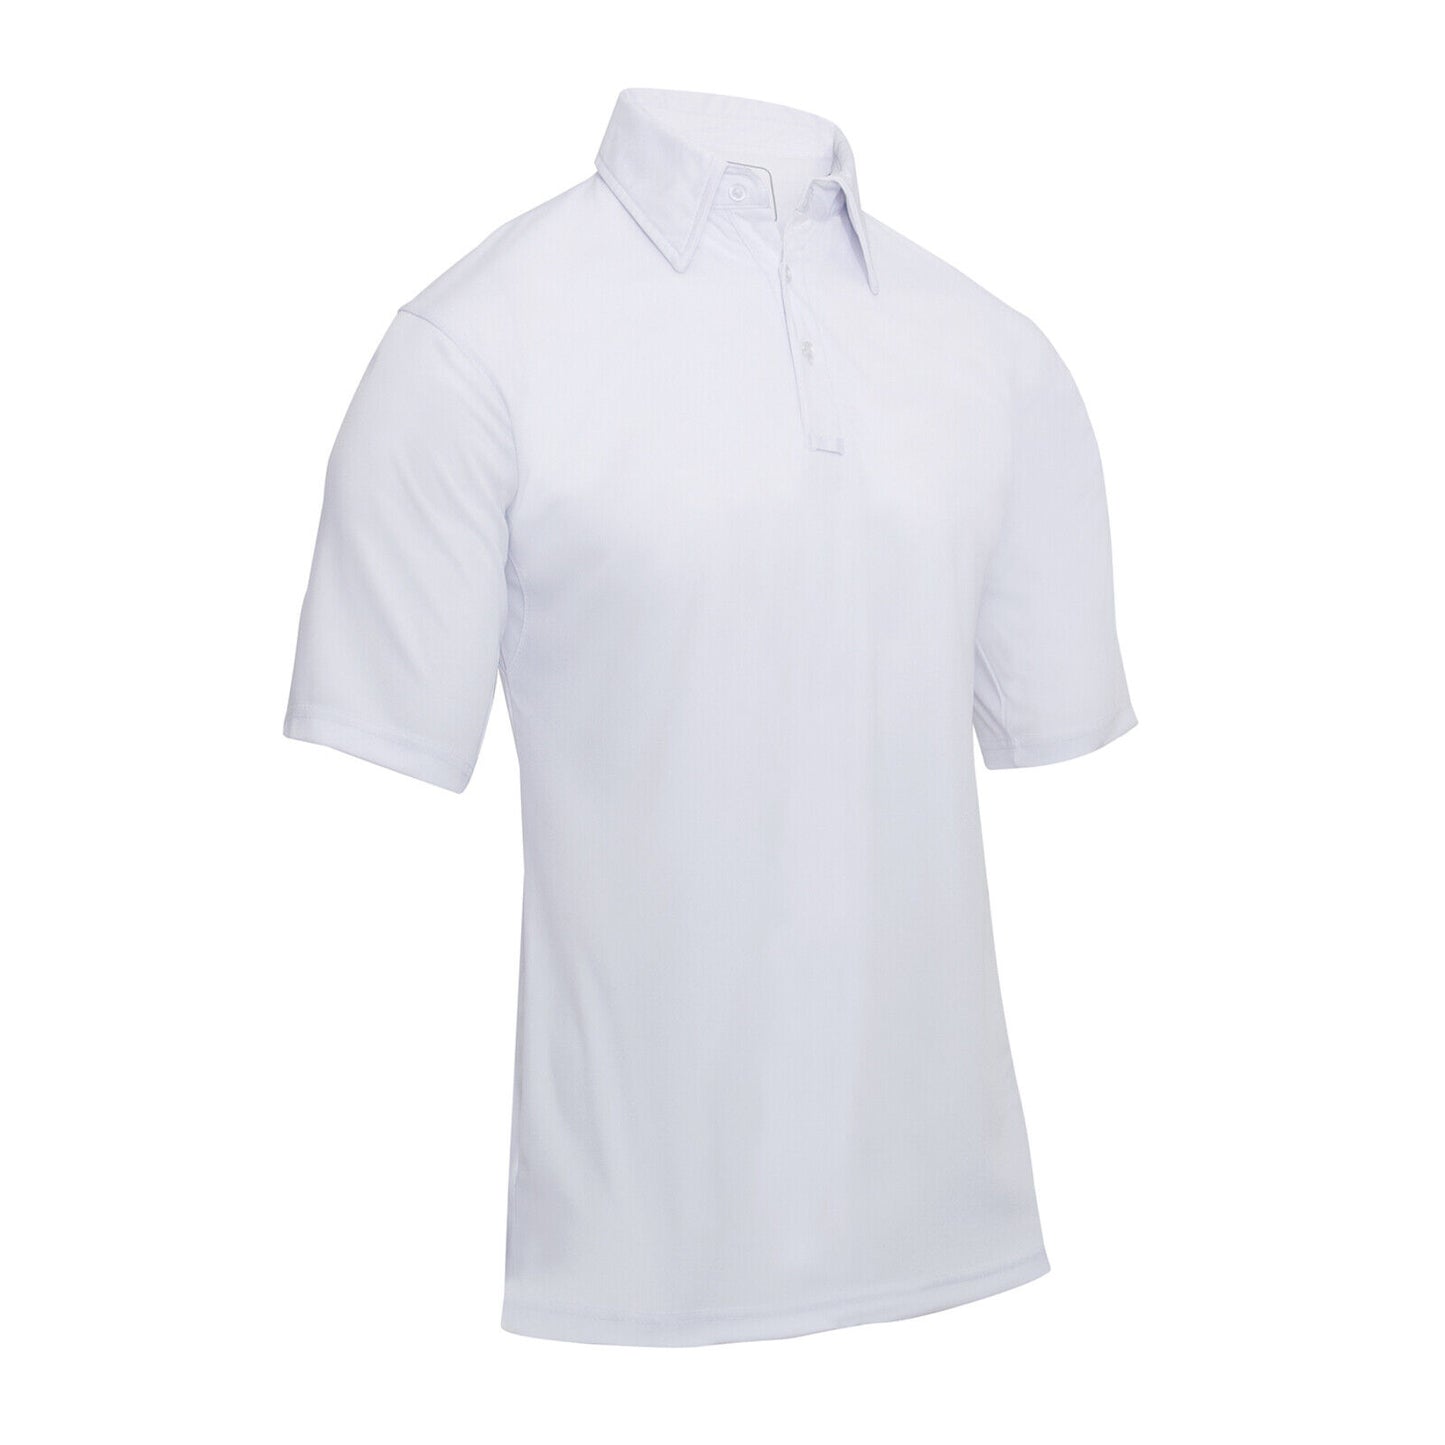 Men's Short Sleeve Tactical Performance White Polo Shirt